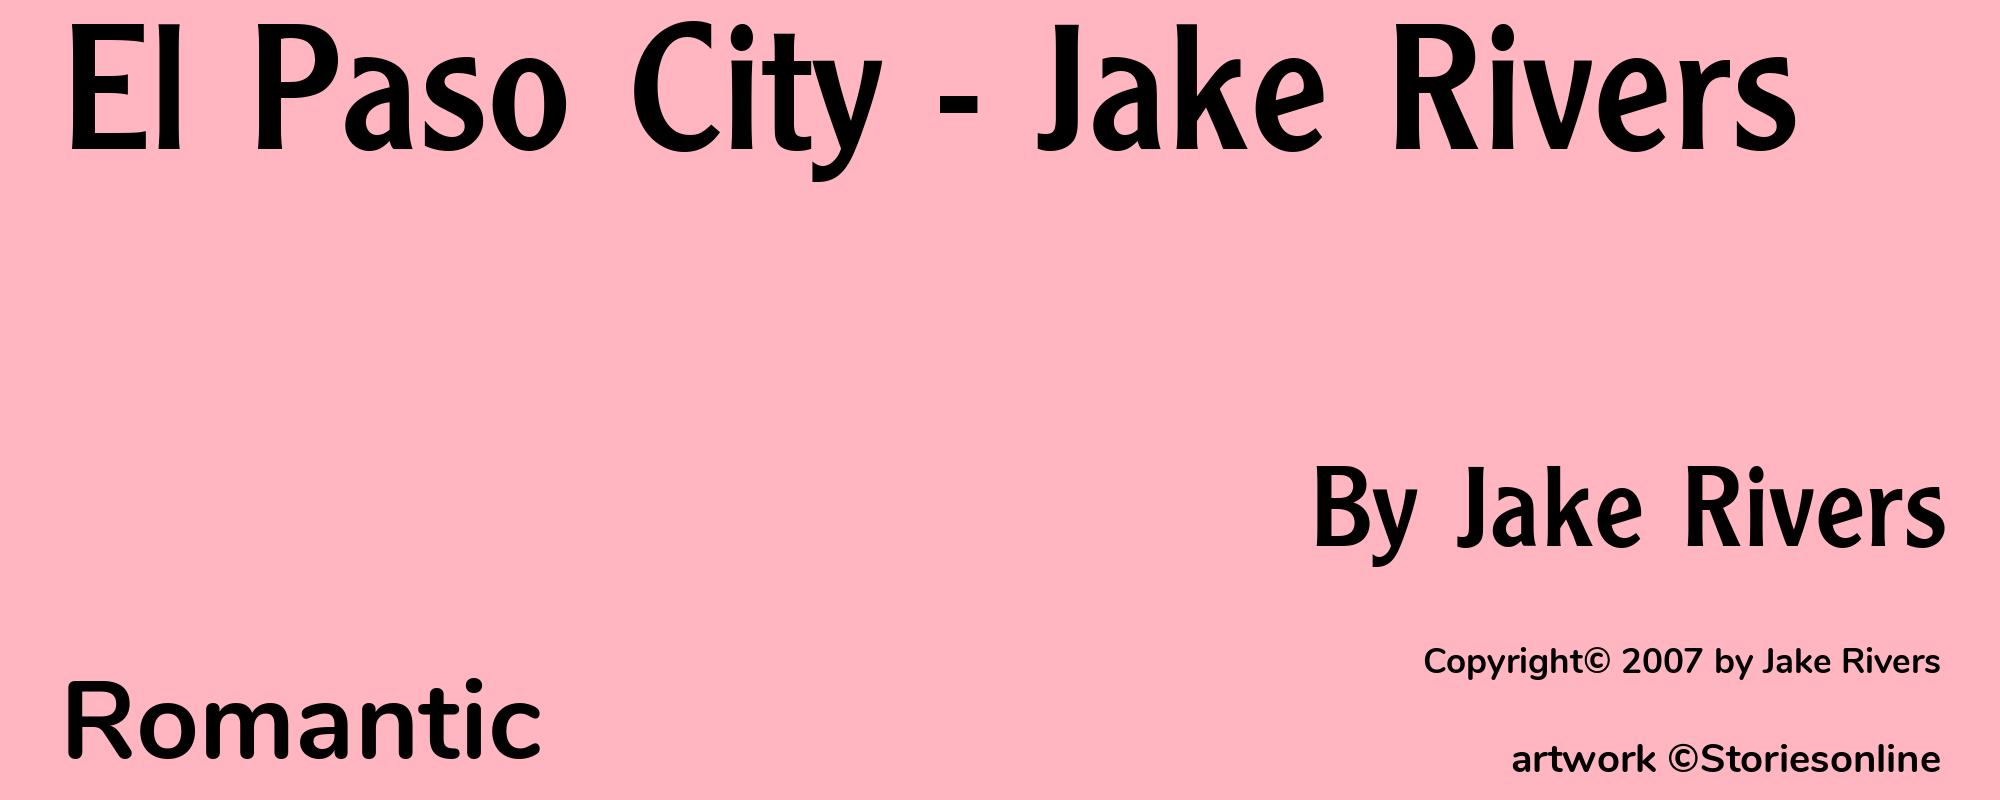 El Paso City - Jake Rivers - Cover